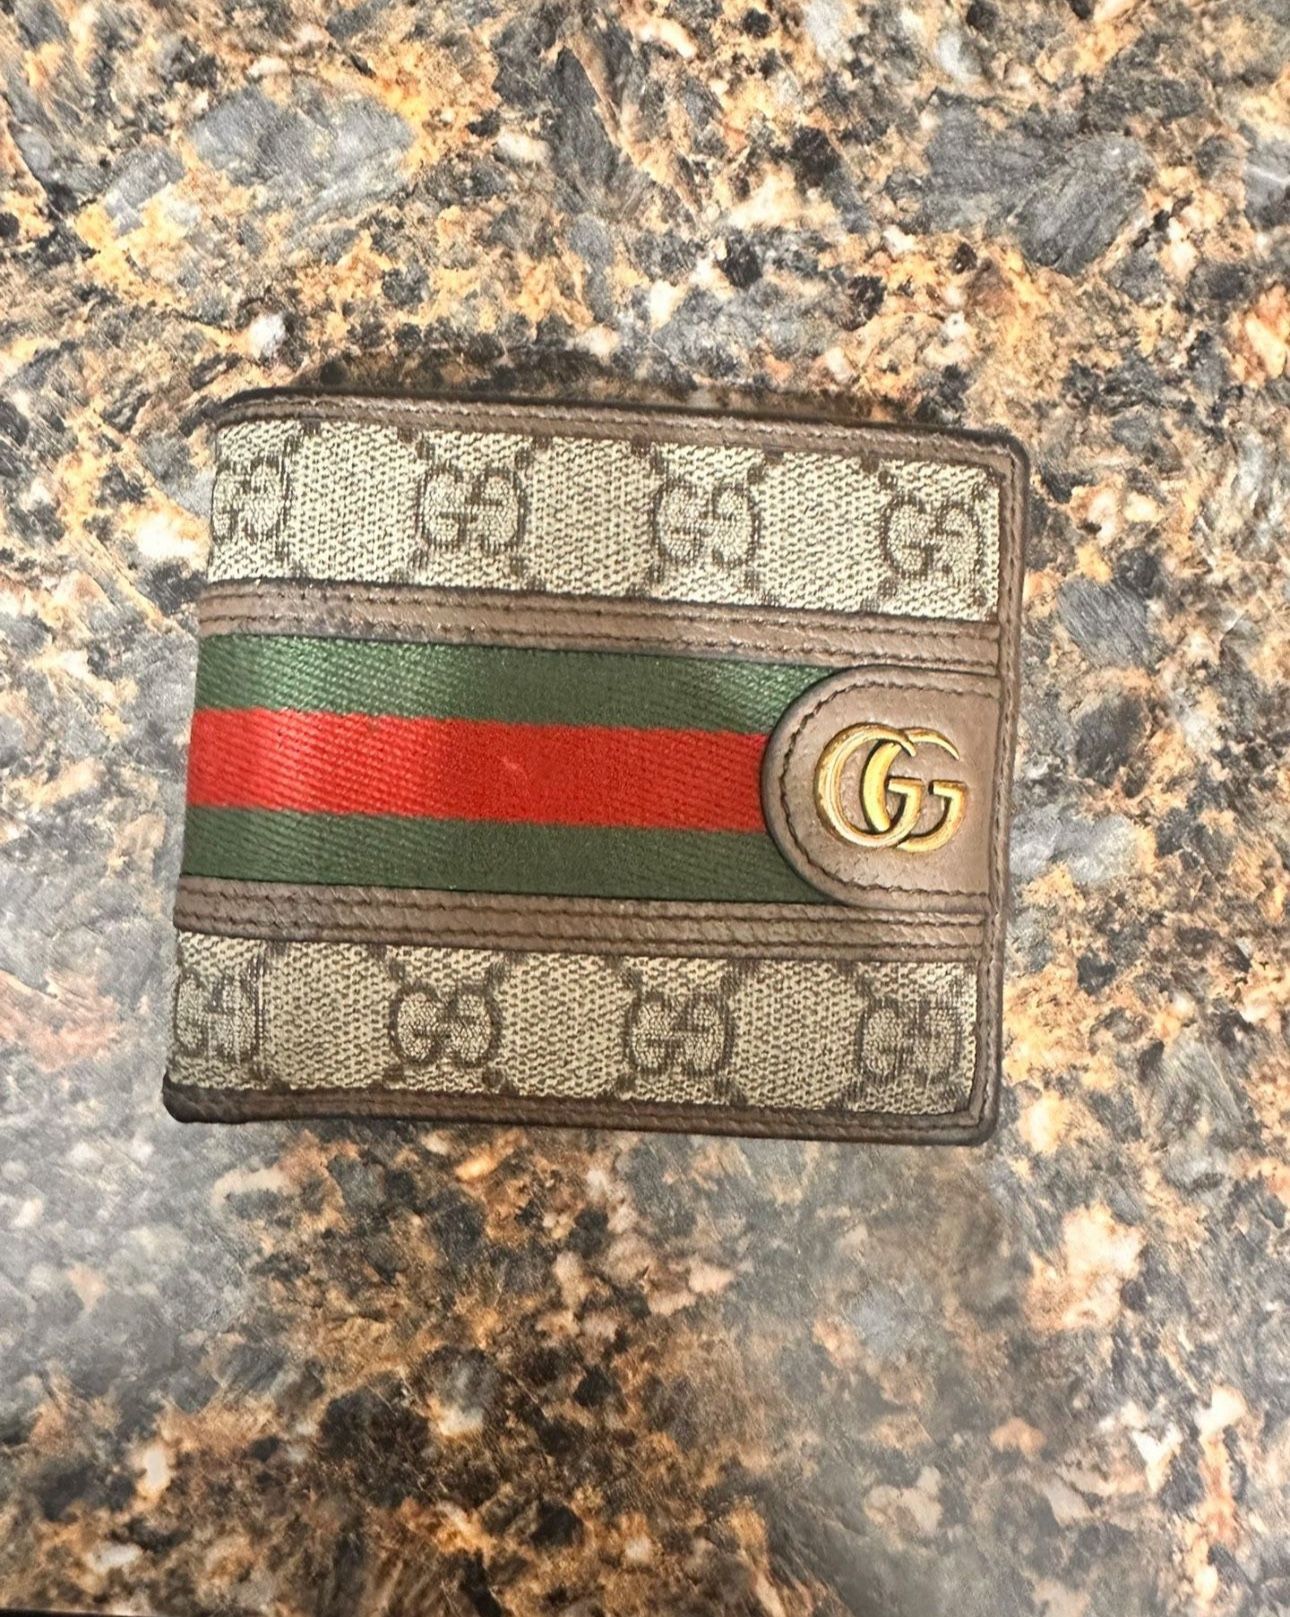 Gucci Bifold Wallet 